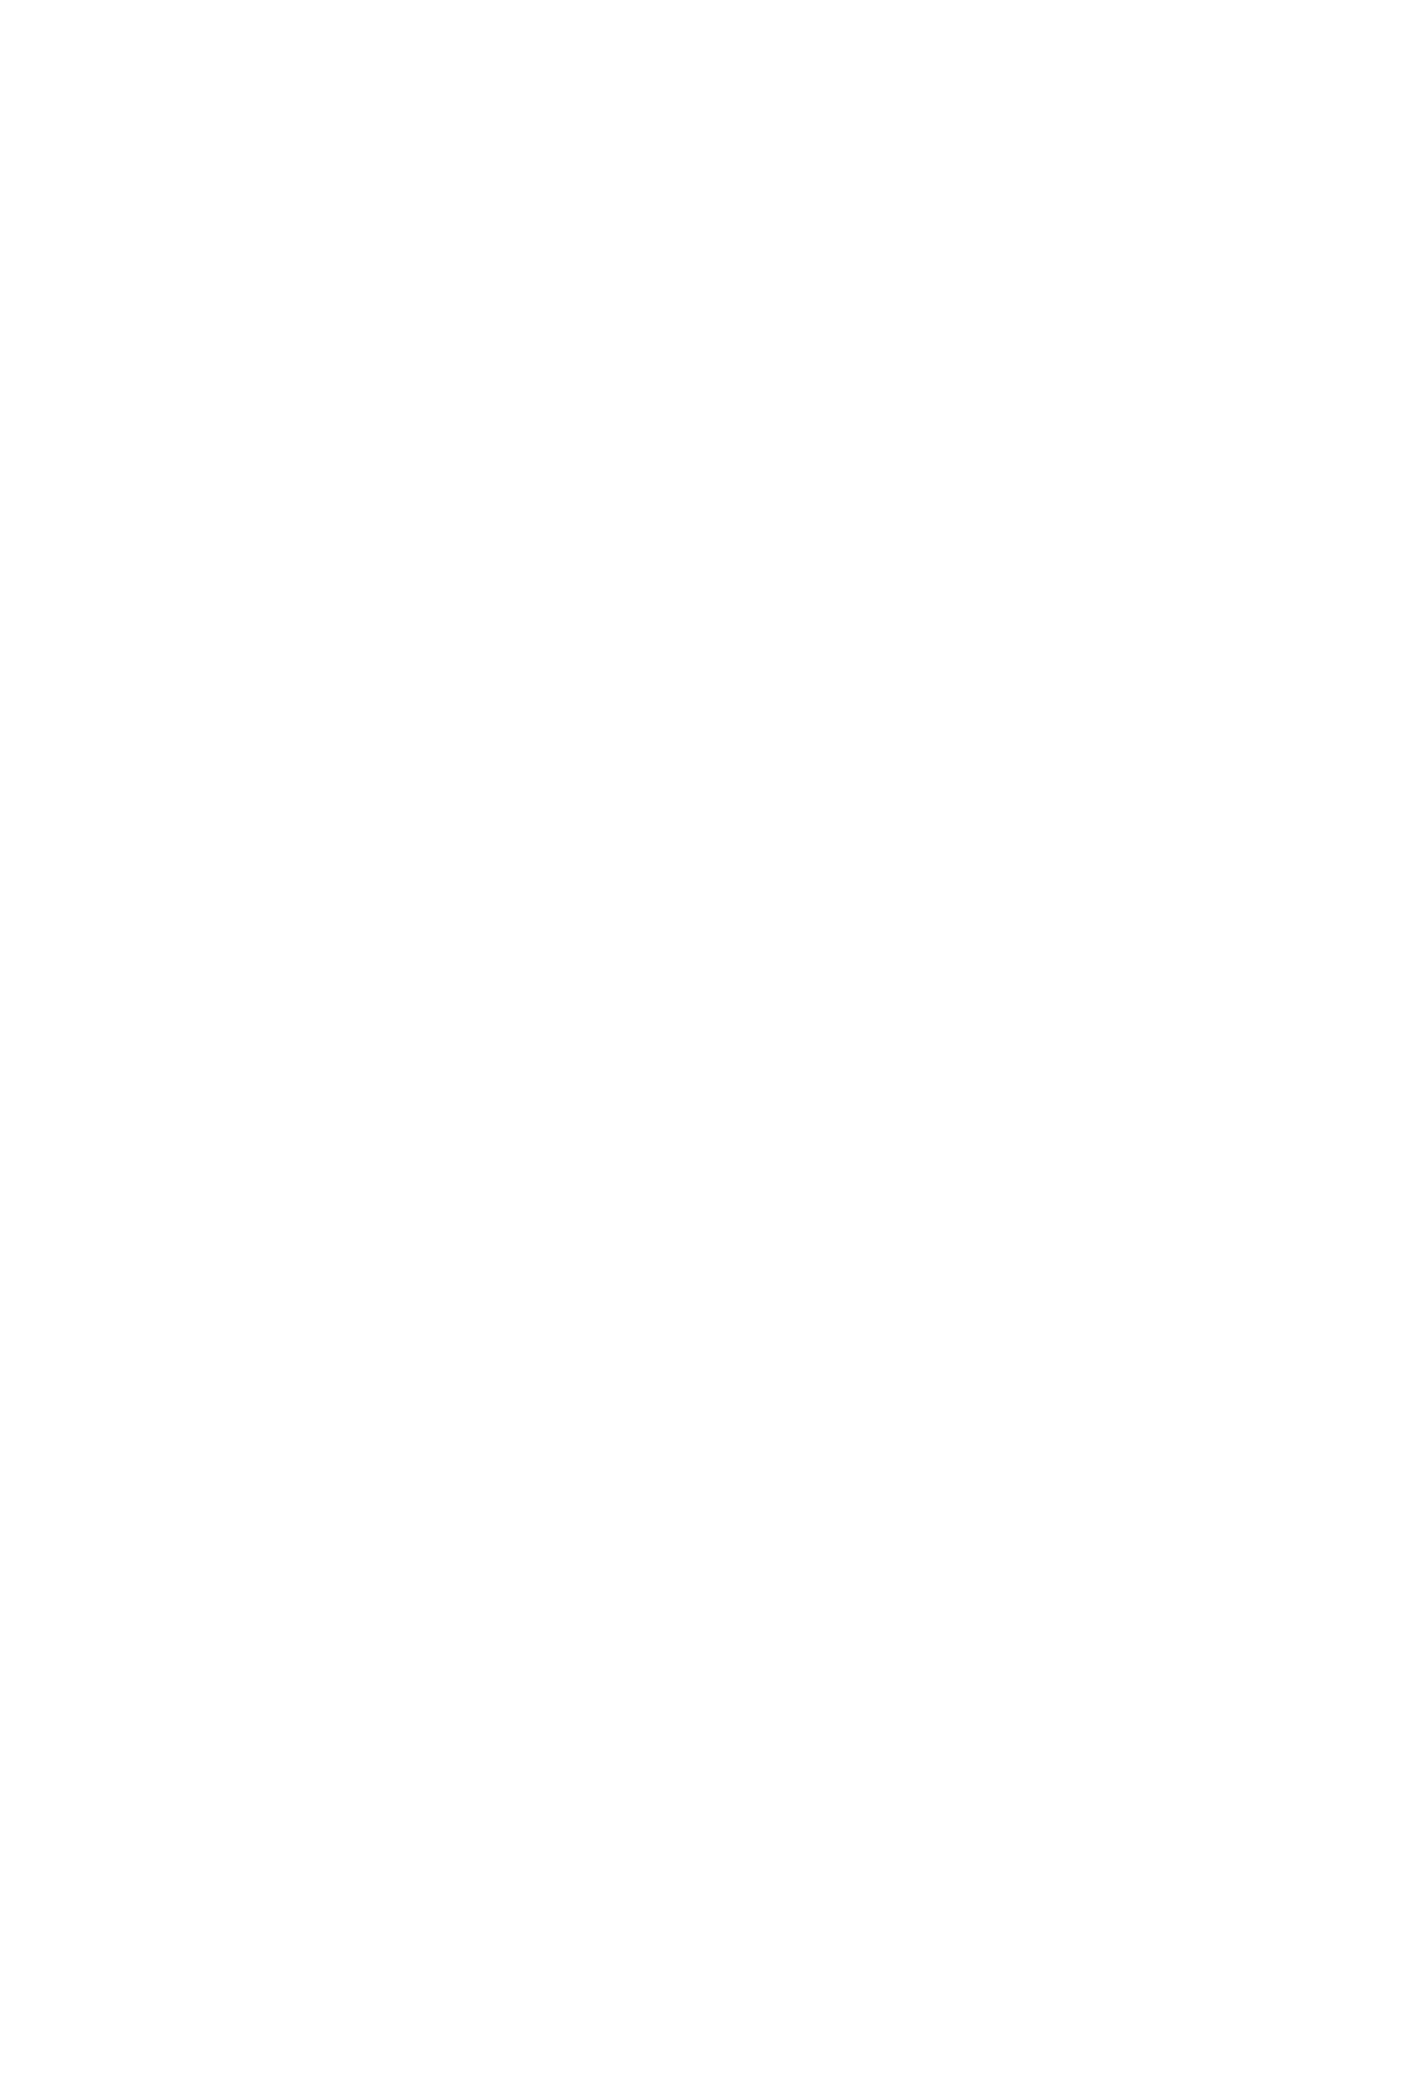 Metric Coffee logo 2019 white.png